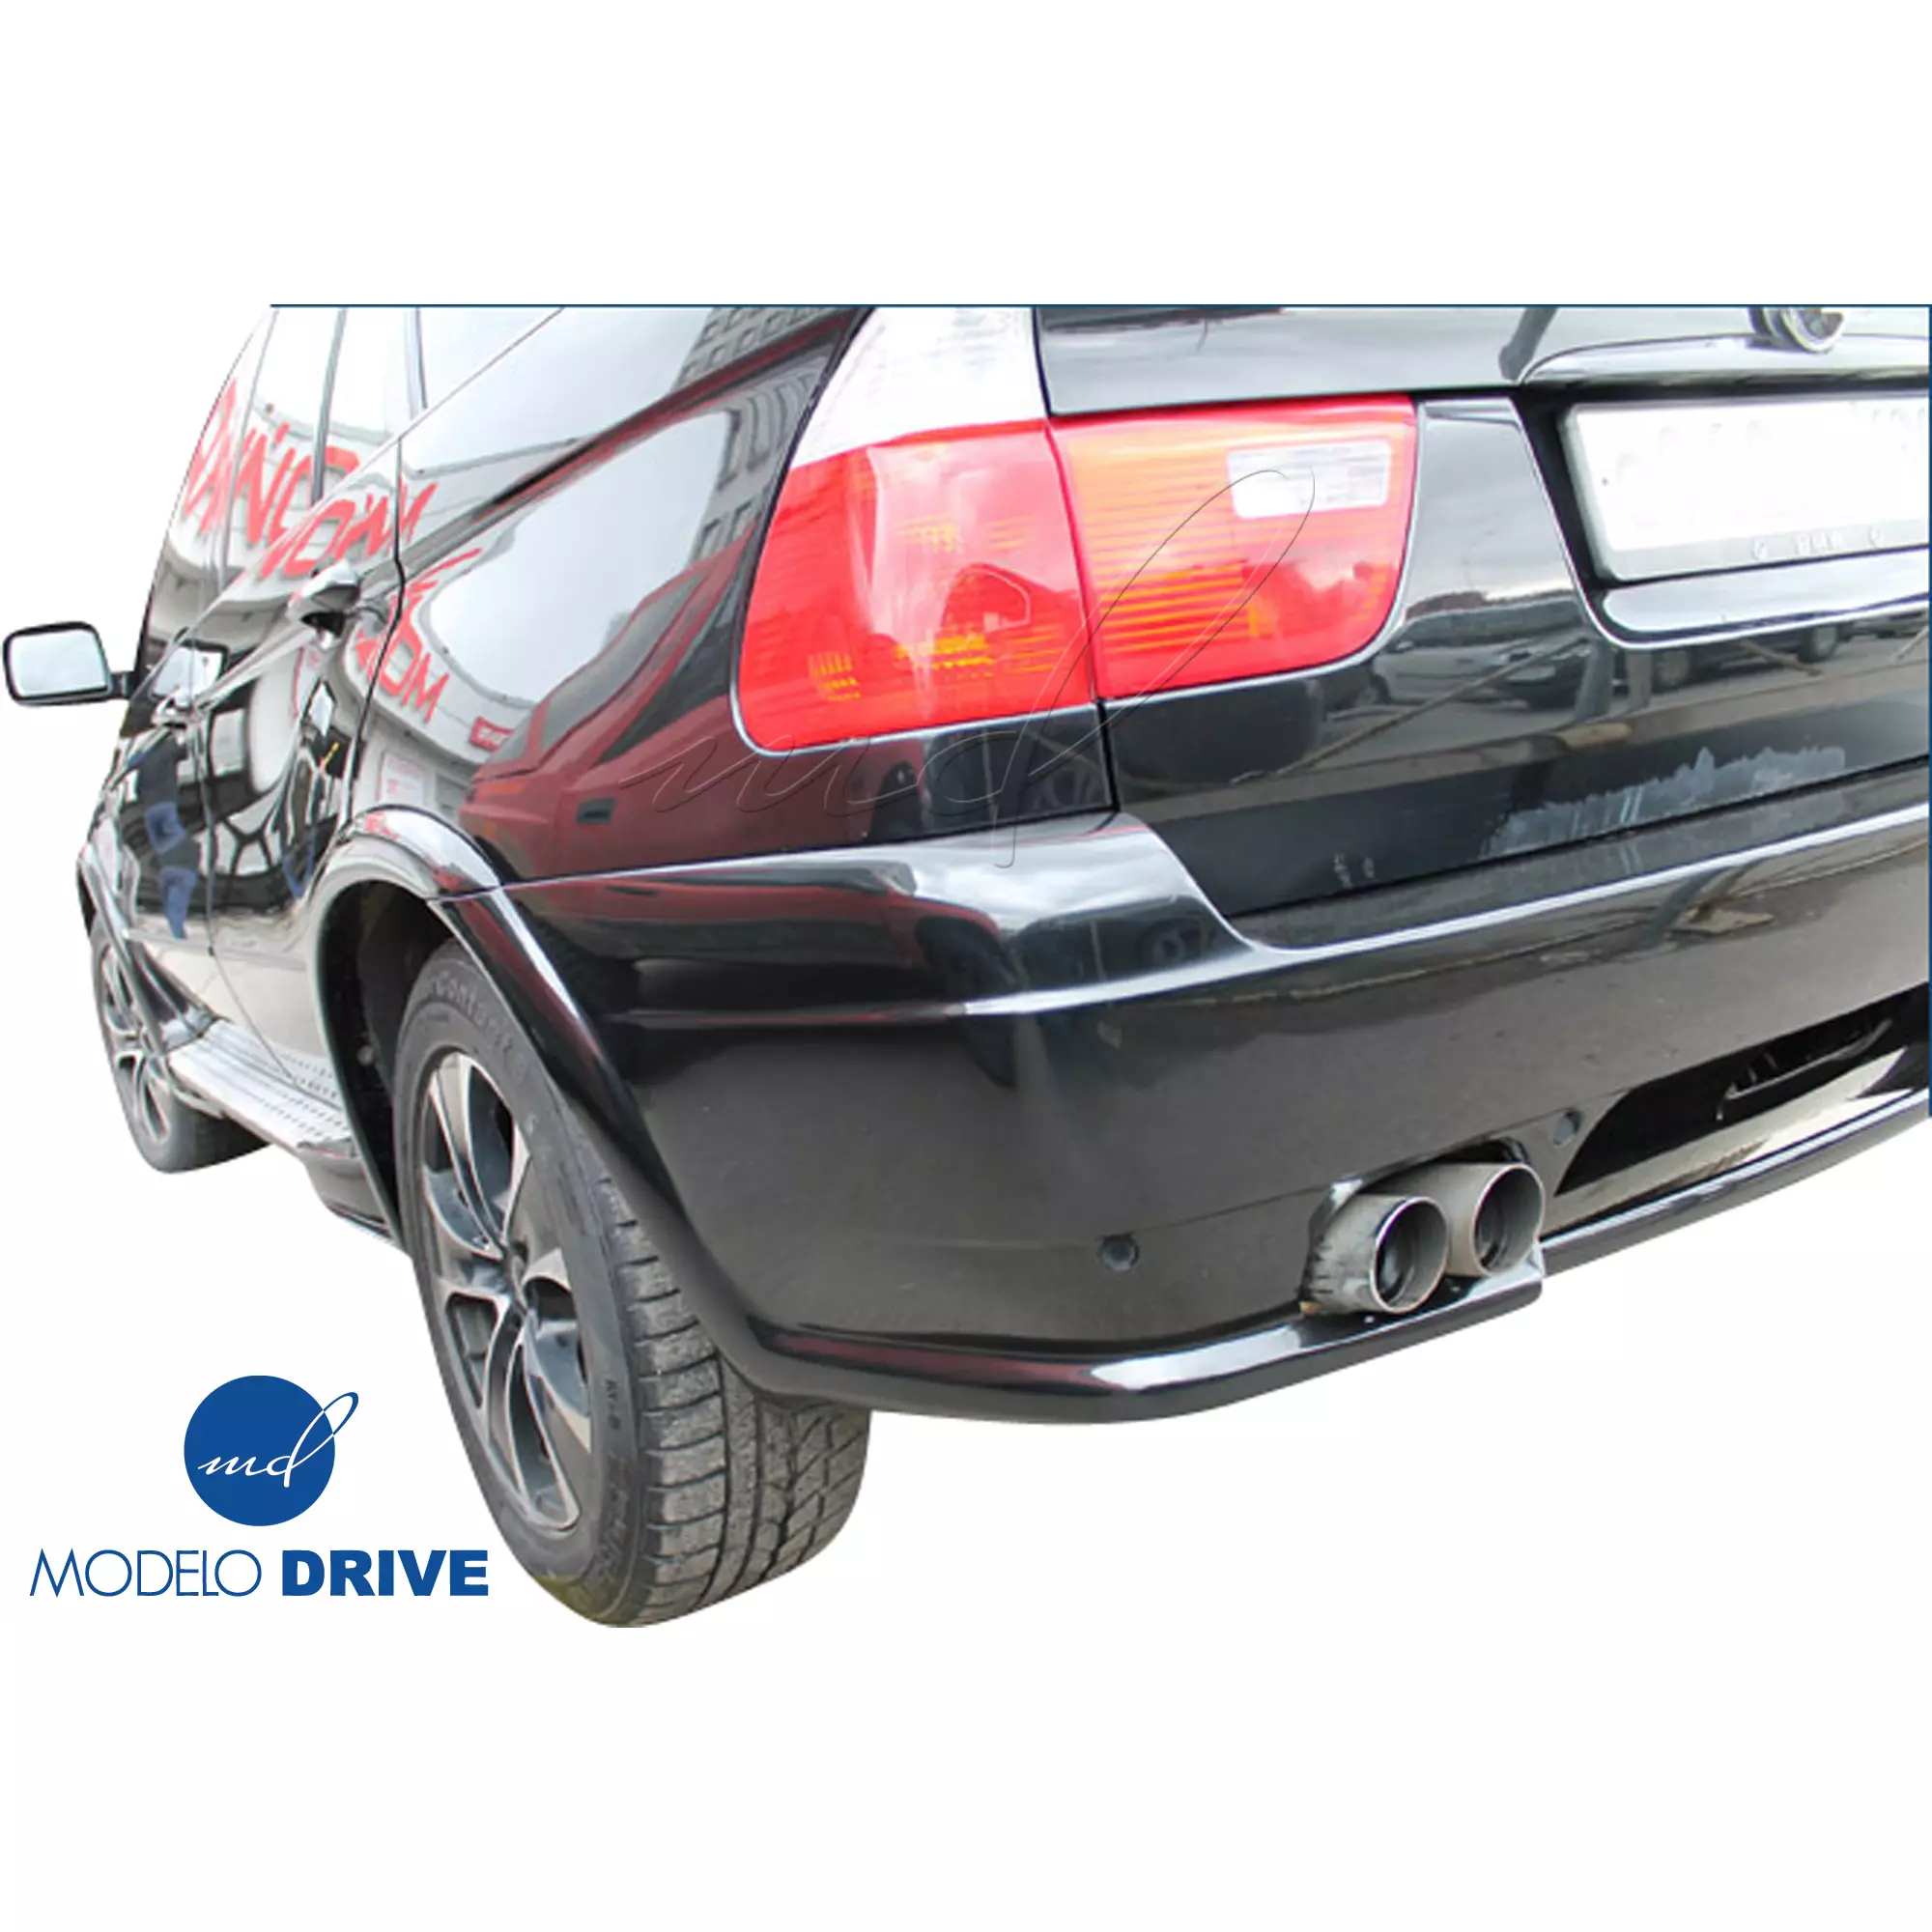 ModeloDrive FRP HAMA Rear Bumper > BMW X5 E53 2000-2006 > 5dr - Image 6